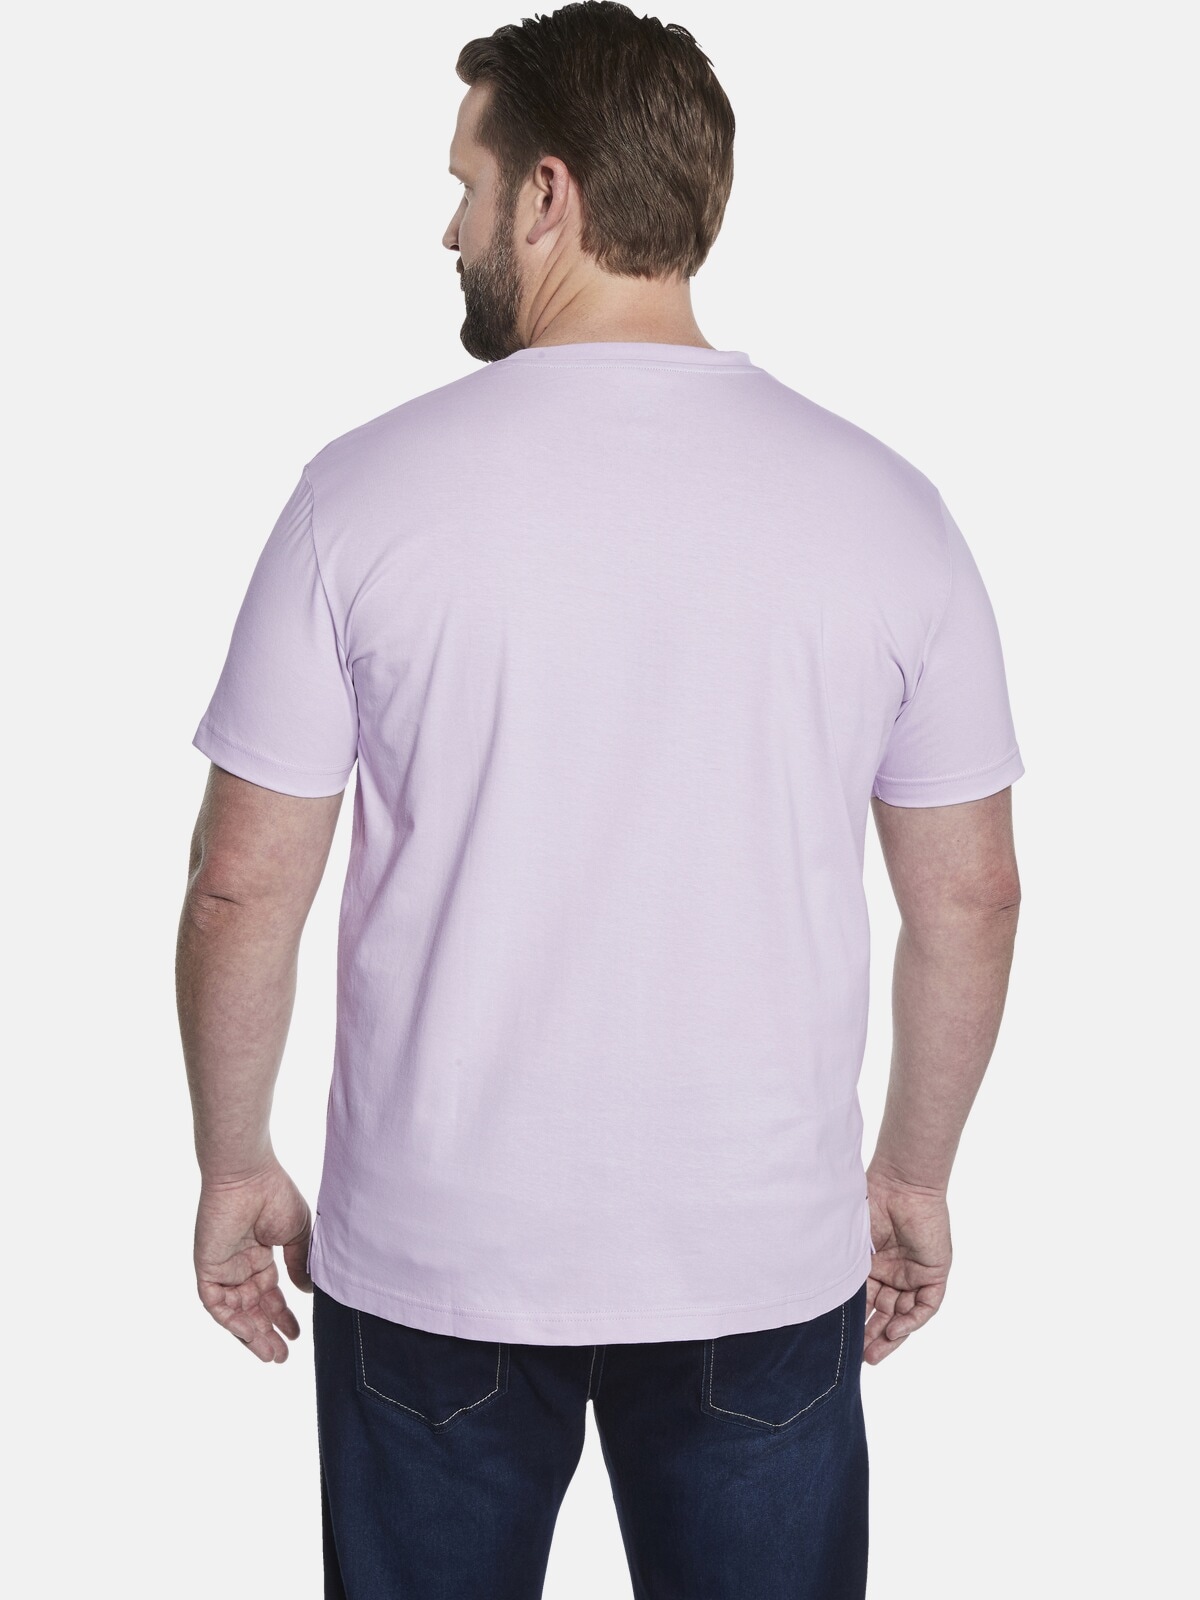 Charles Colby T-Shirt »Doppelpack T-Shirt EARL RHODIN«, (1 tlg.), in zwei Farbvarianten